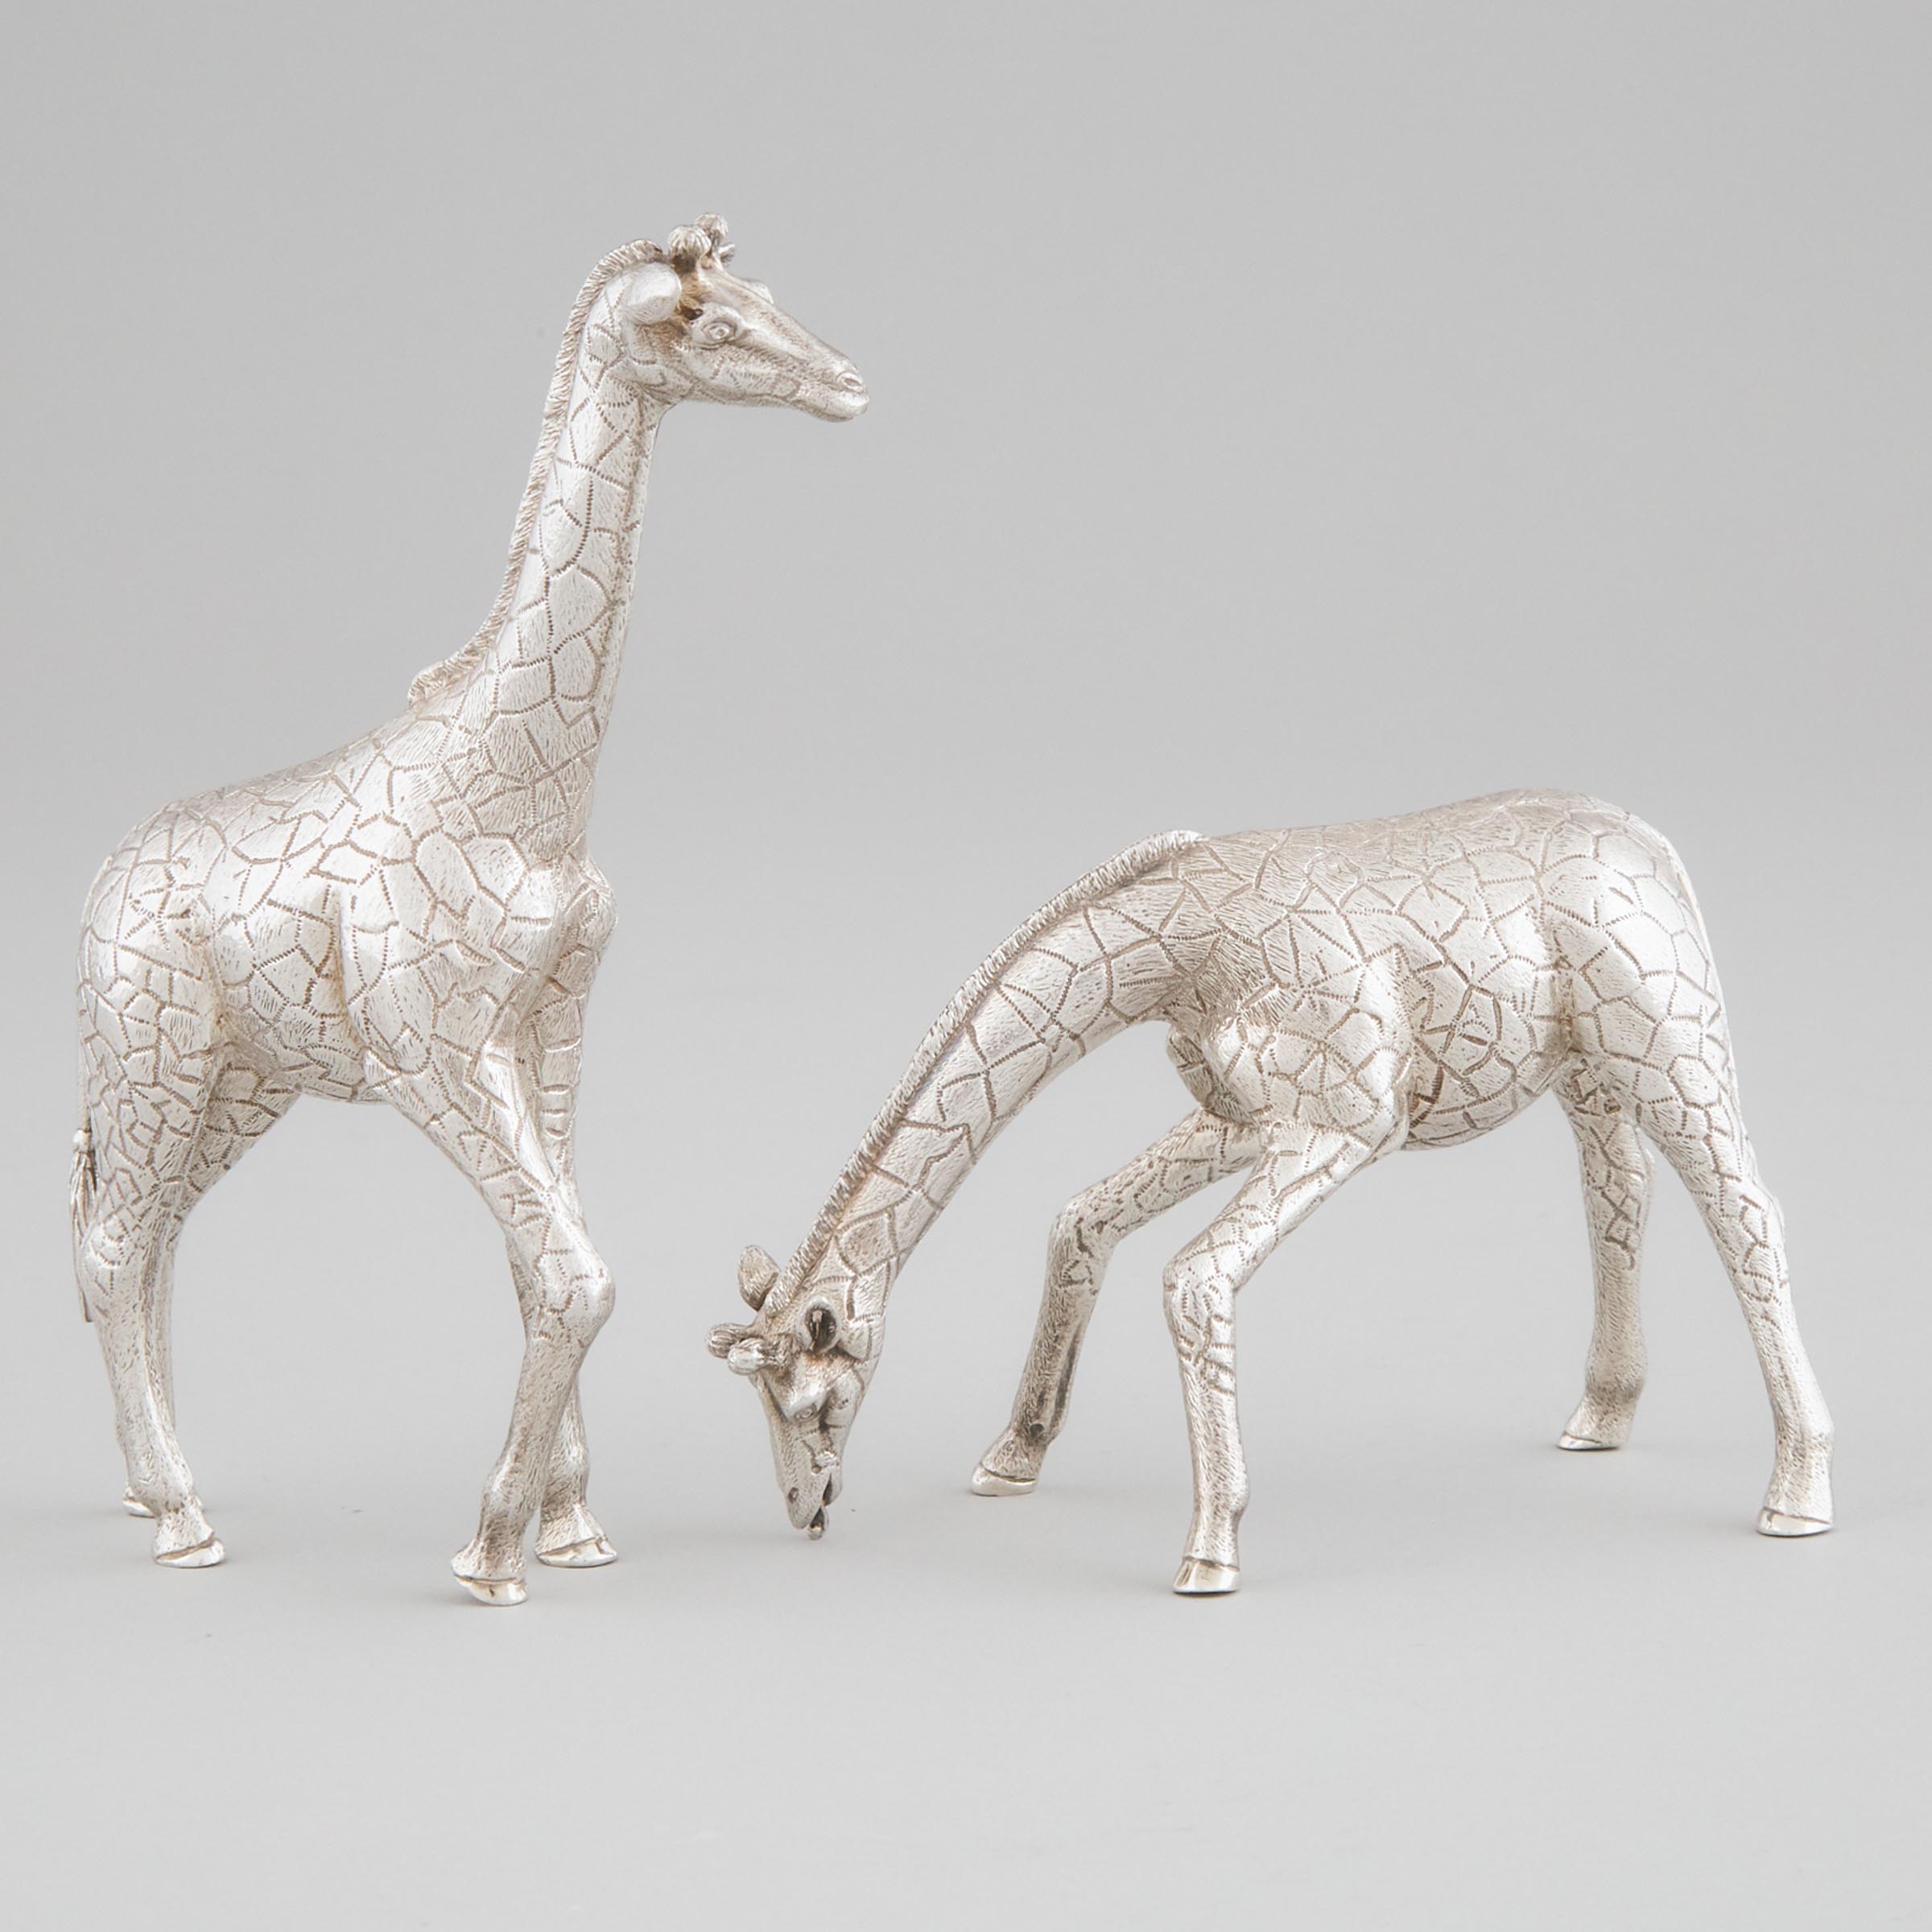 Two English Silver Models of Giraffes, Asprey & Co., London, 1997